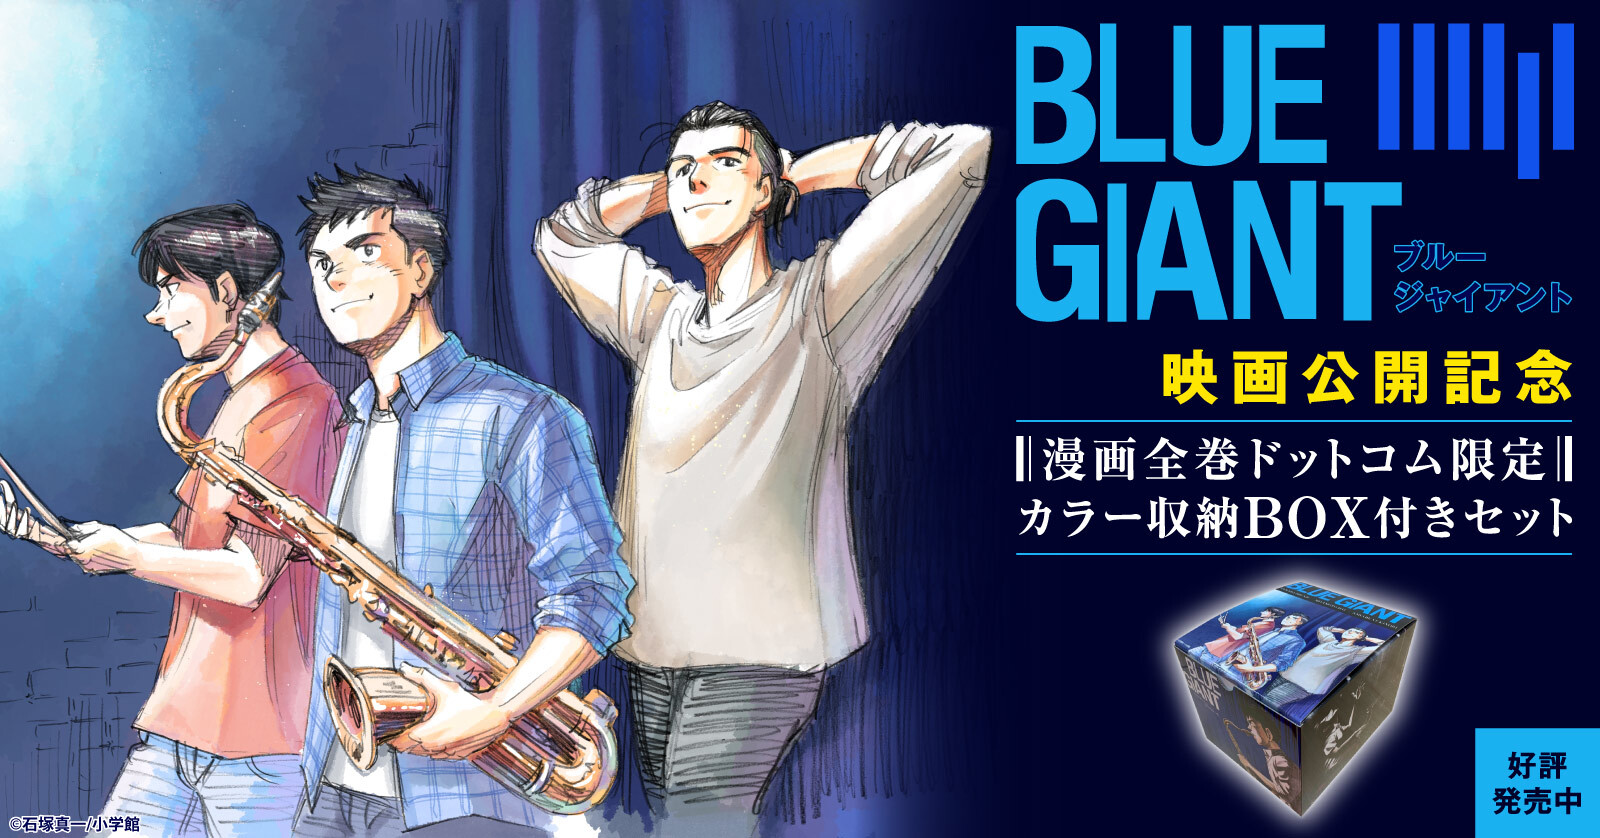 BLUE GIANT ブルージャイアント シリーズ 全巻 全29巻